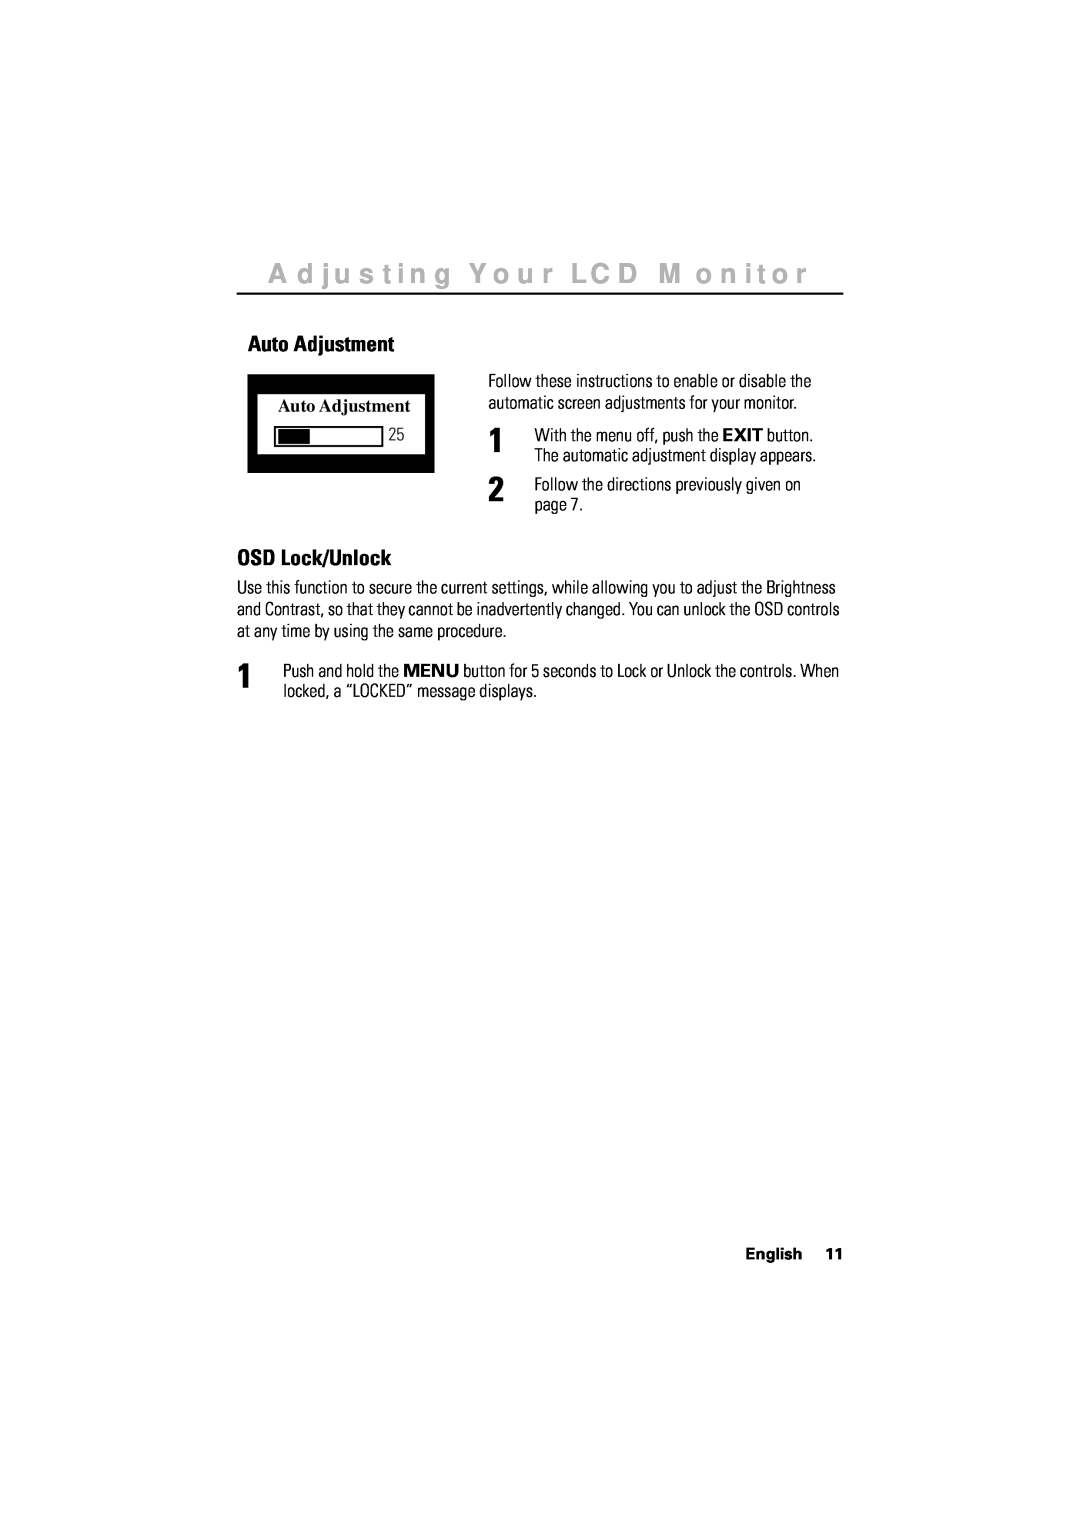 Samsung 170T manual Français, Italiano Portuguese Deutsch Español, Auto Adjustment, OSD Lock/Unlock, English 